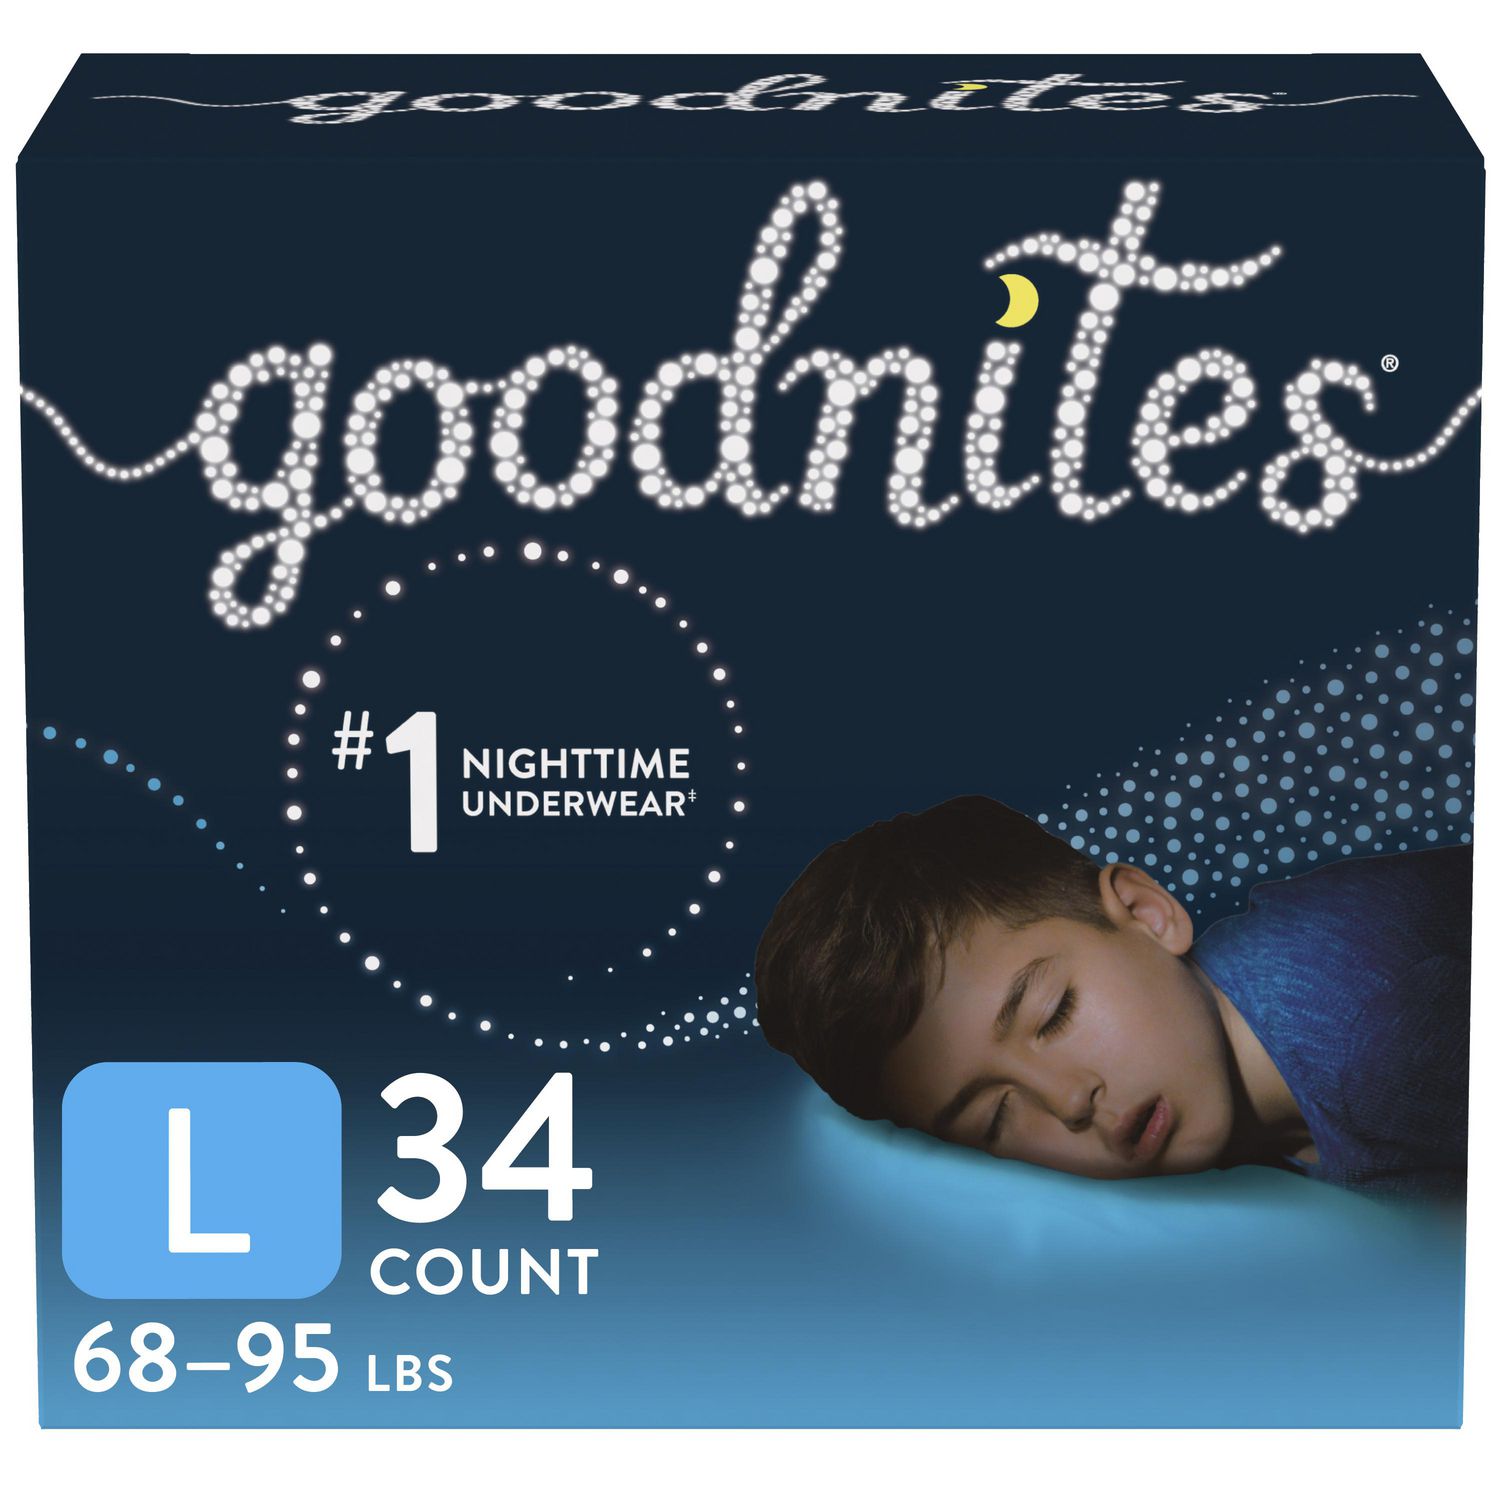 Goodnites Boys' Nighttime Bedwetting Underwear, Size XL , 46 ct